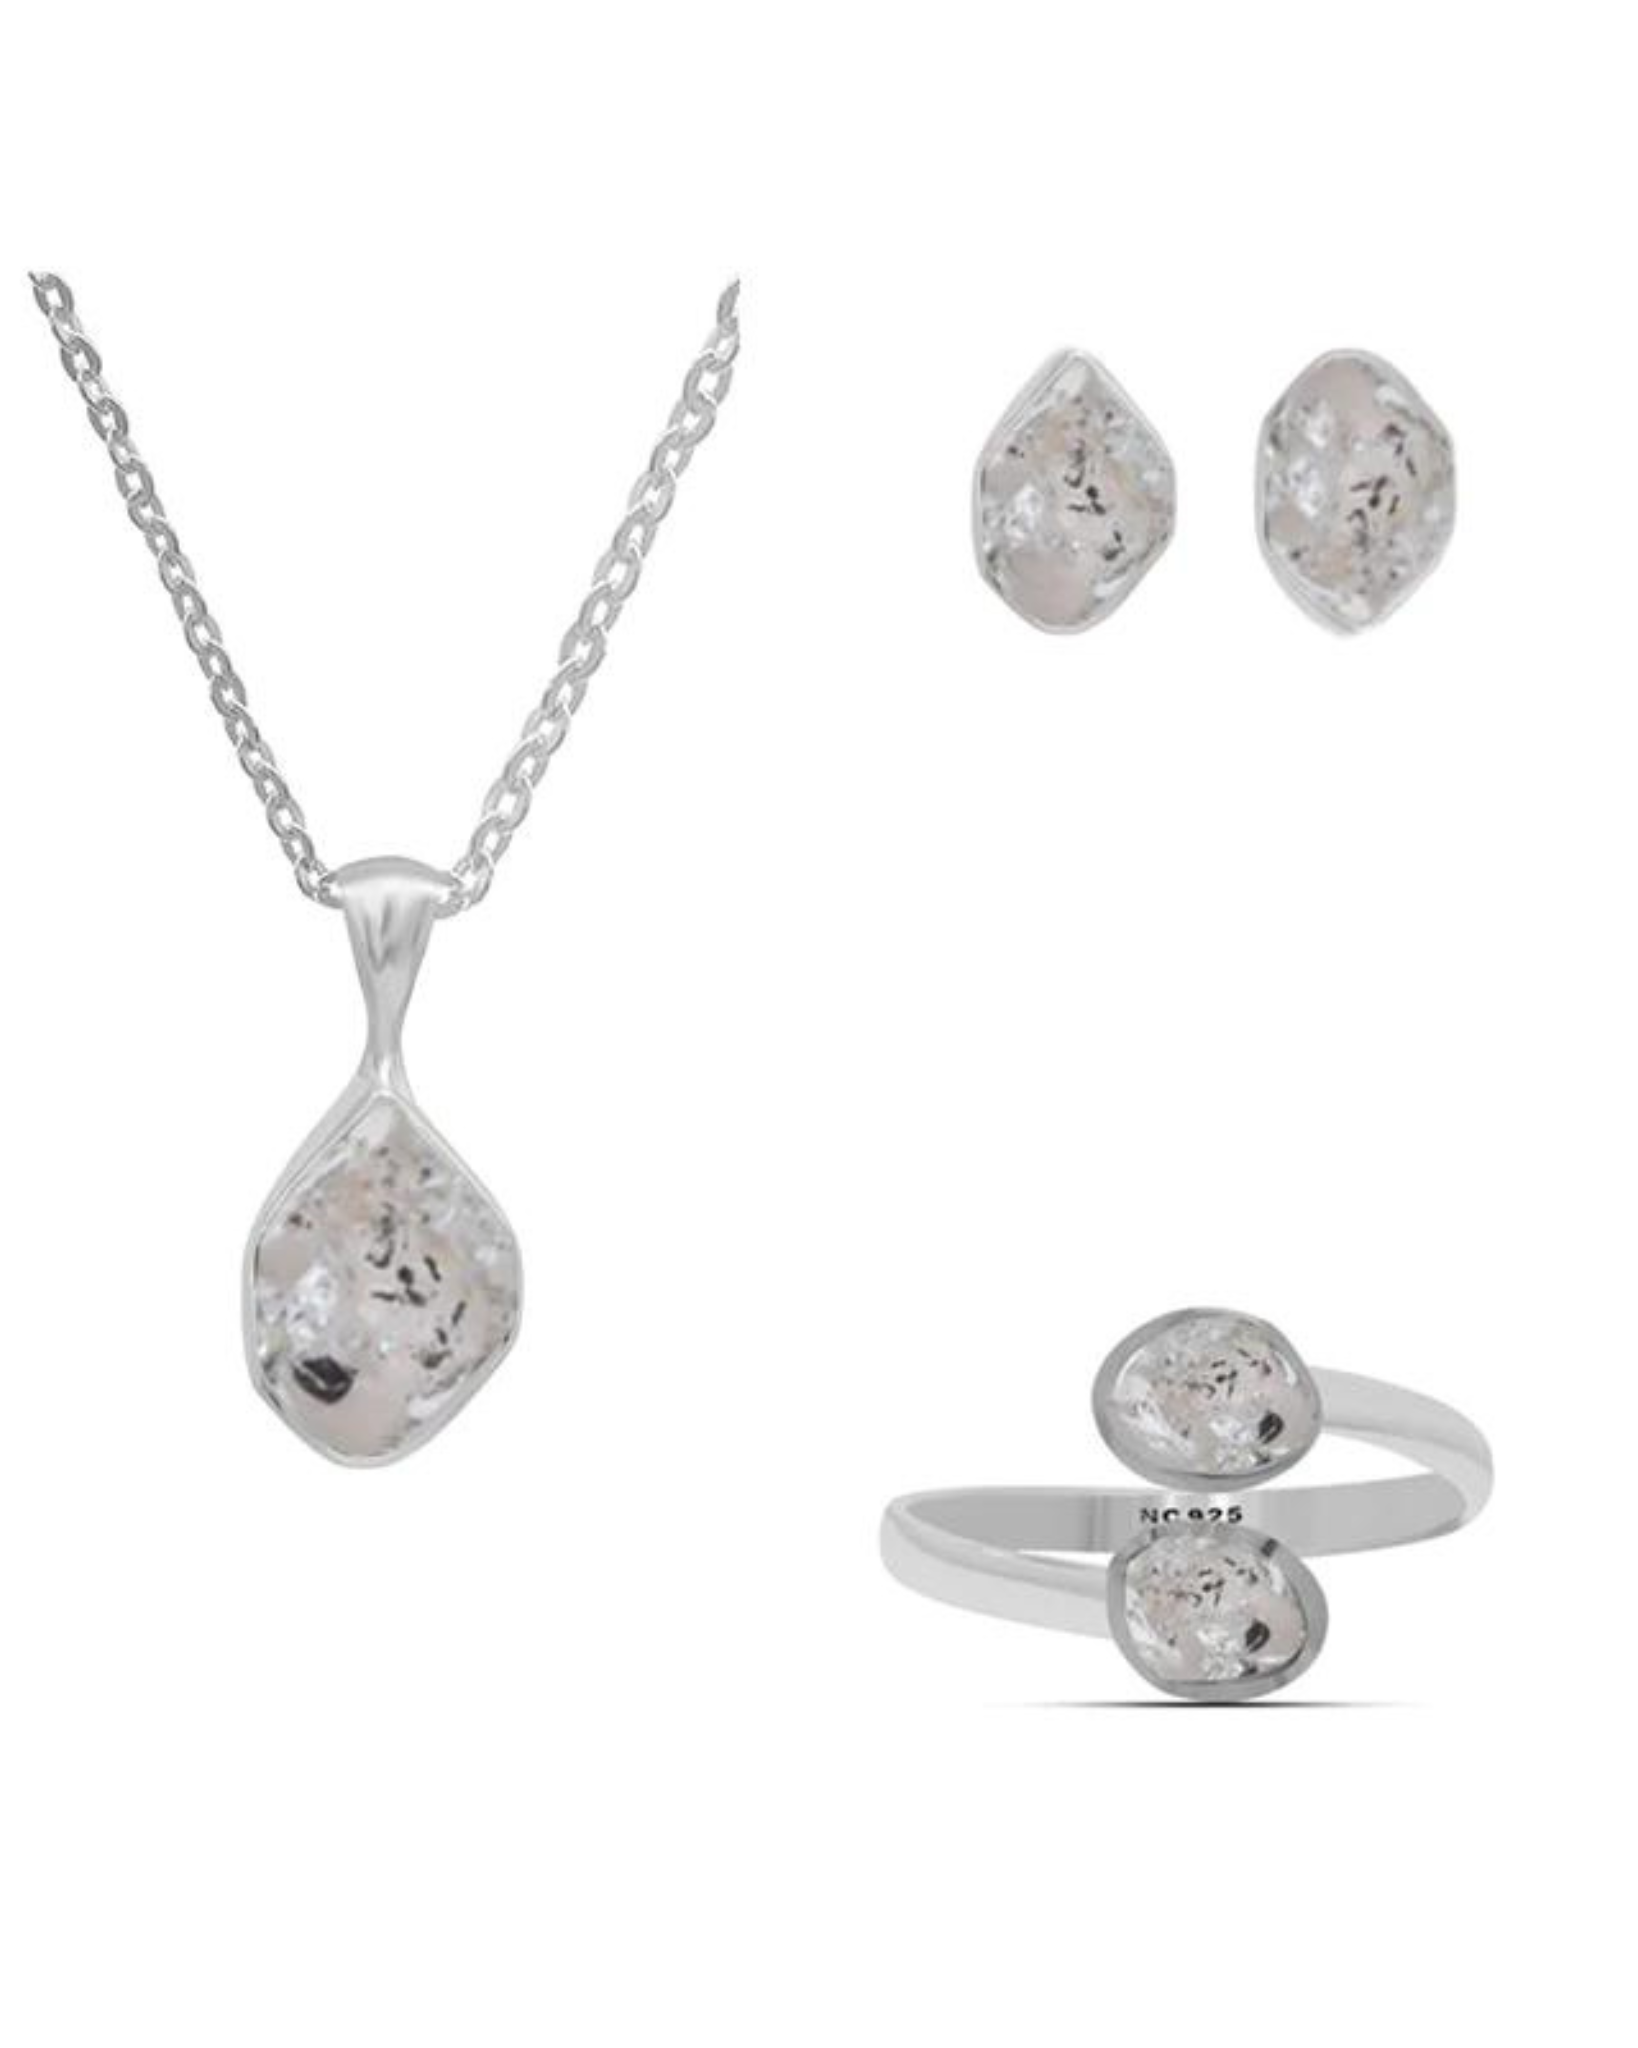 Herkimer Diamond Jewellery Silver Gift Set 925